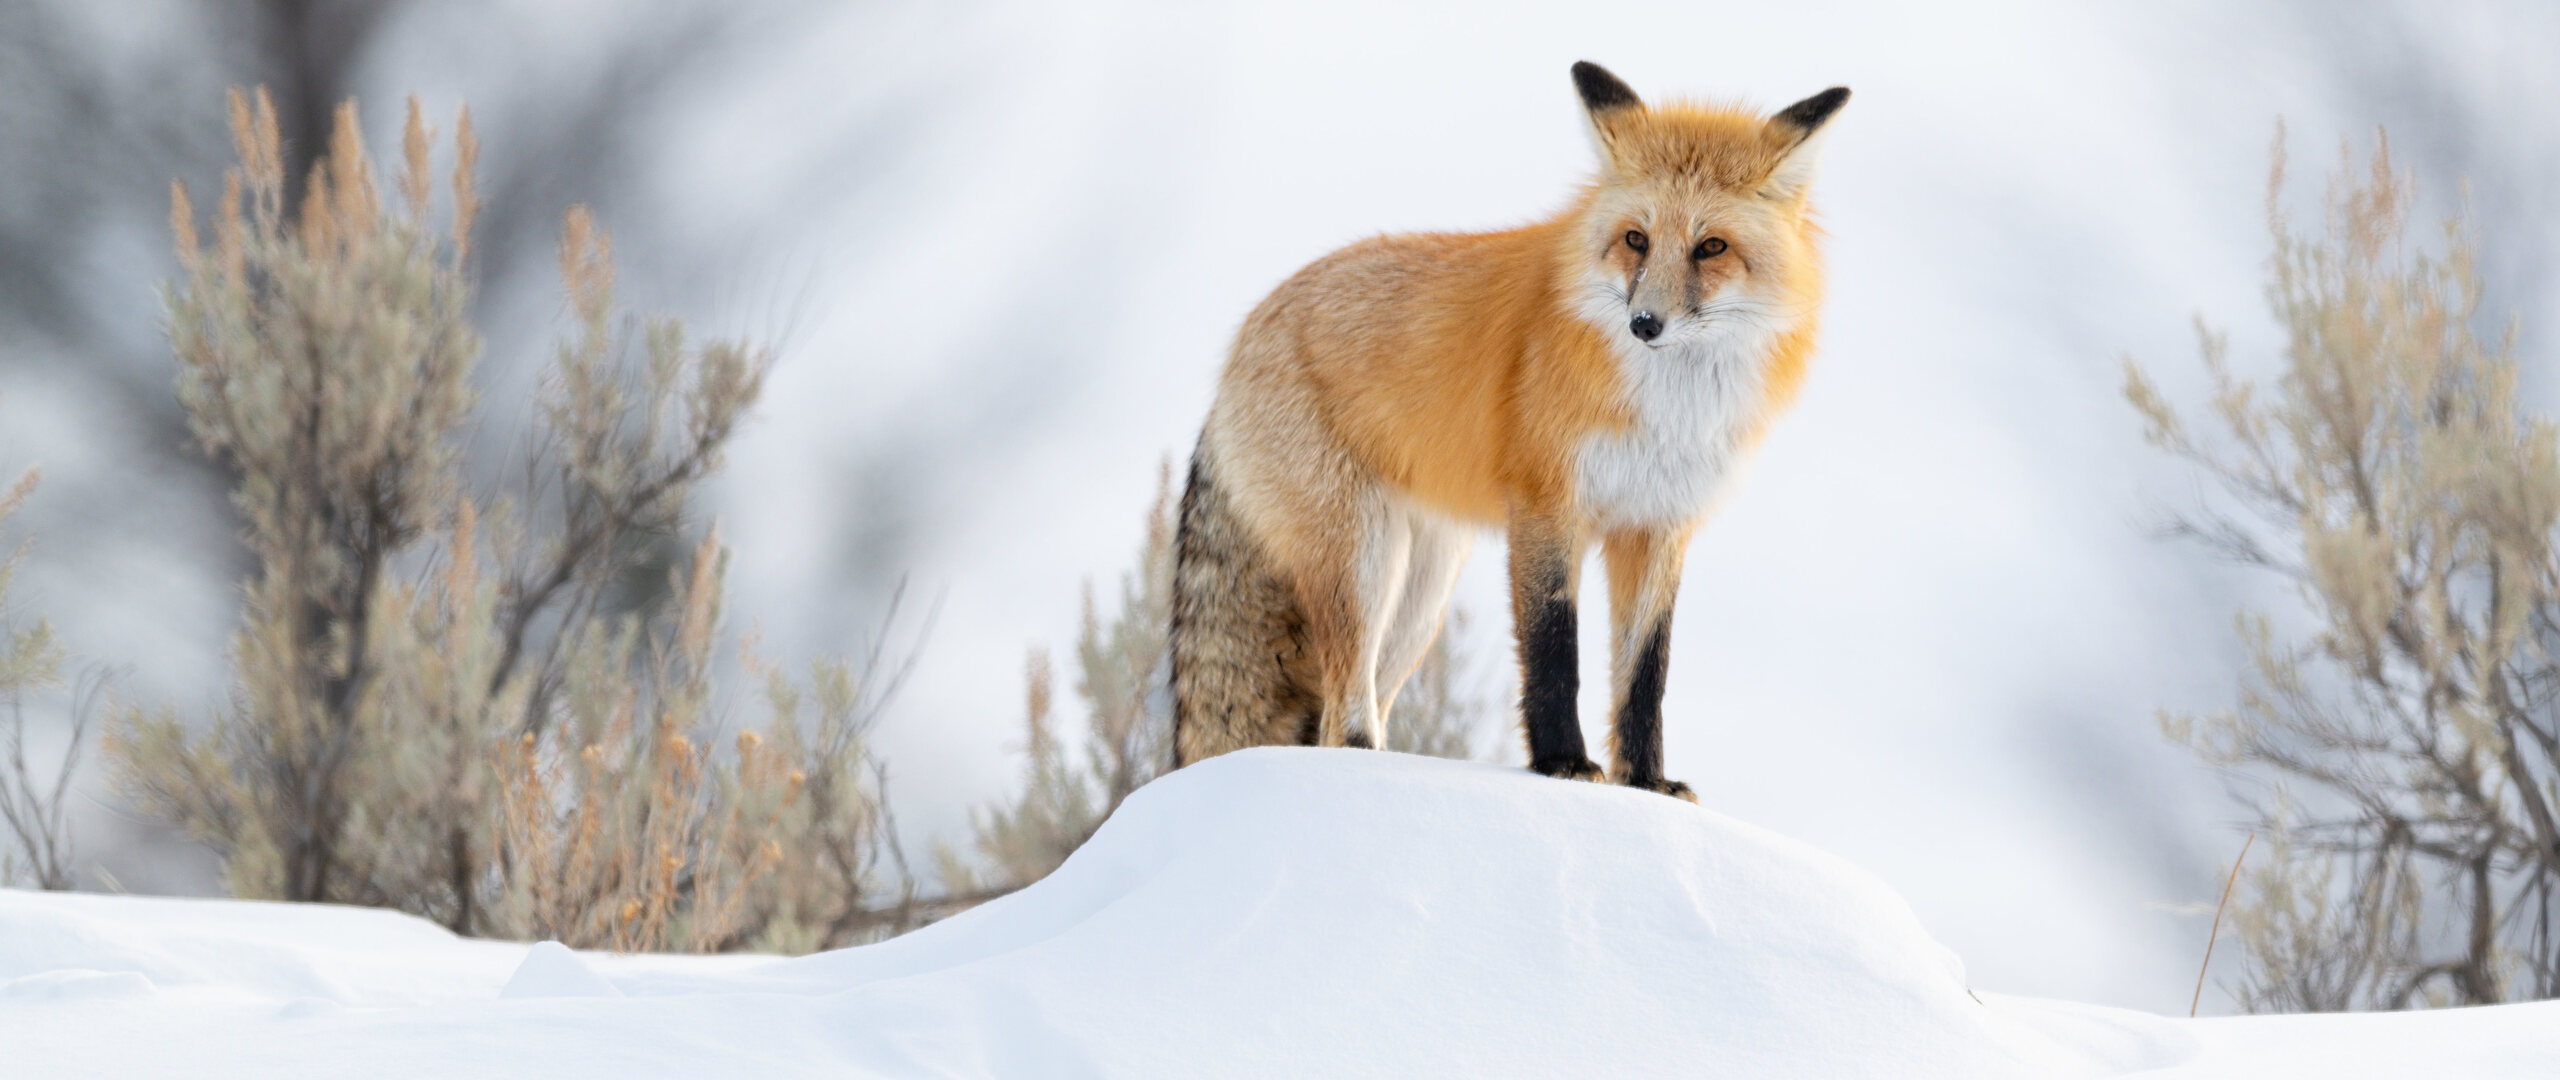 fox-winter-5k-vp-2560x1080.jpg